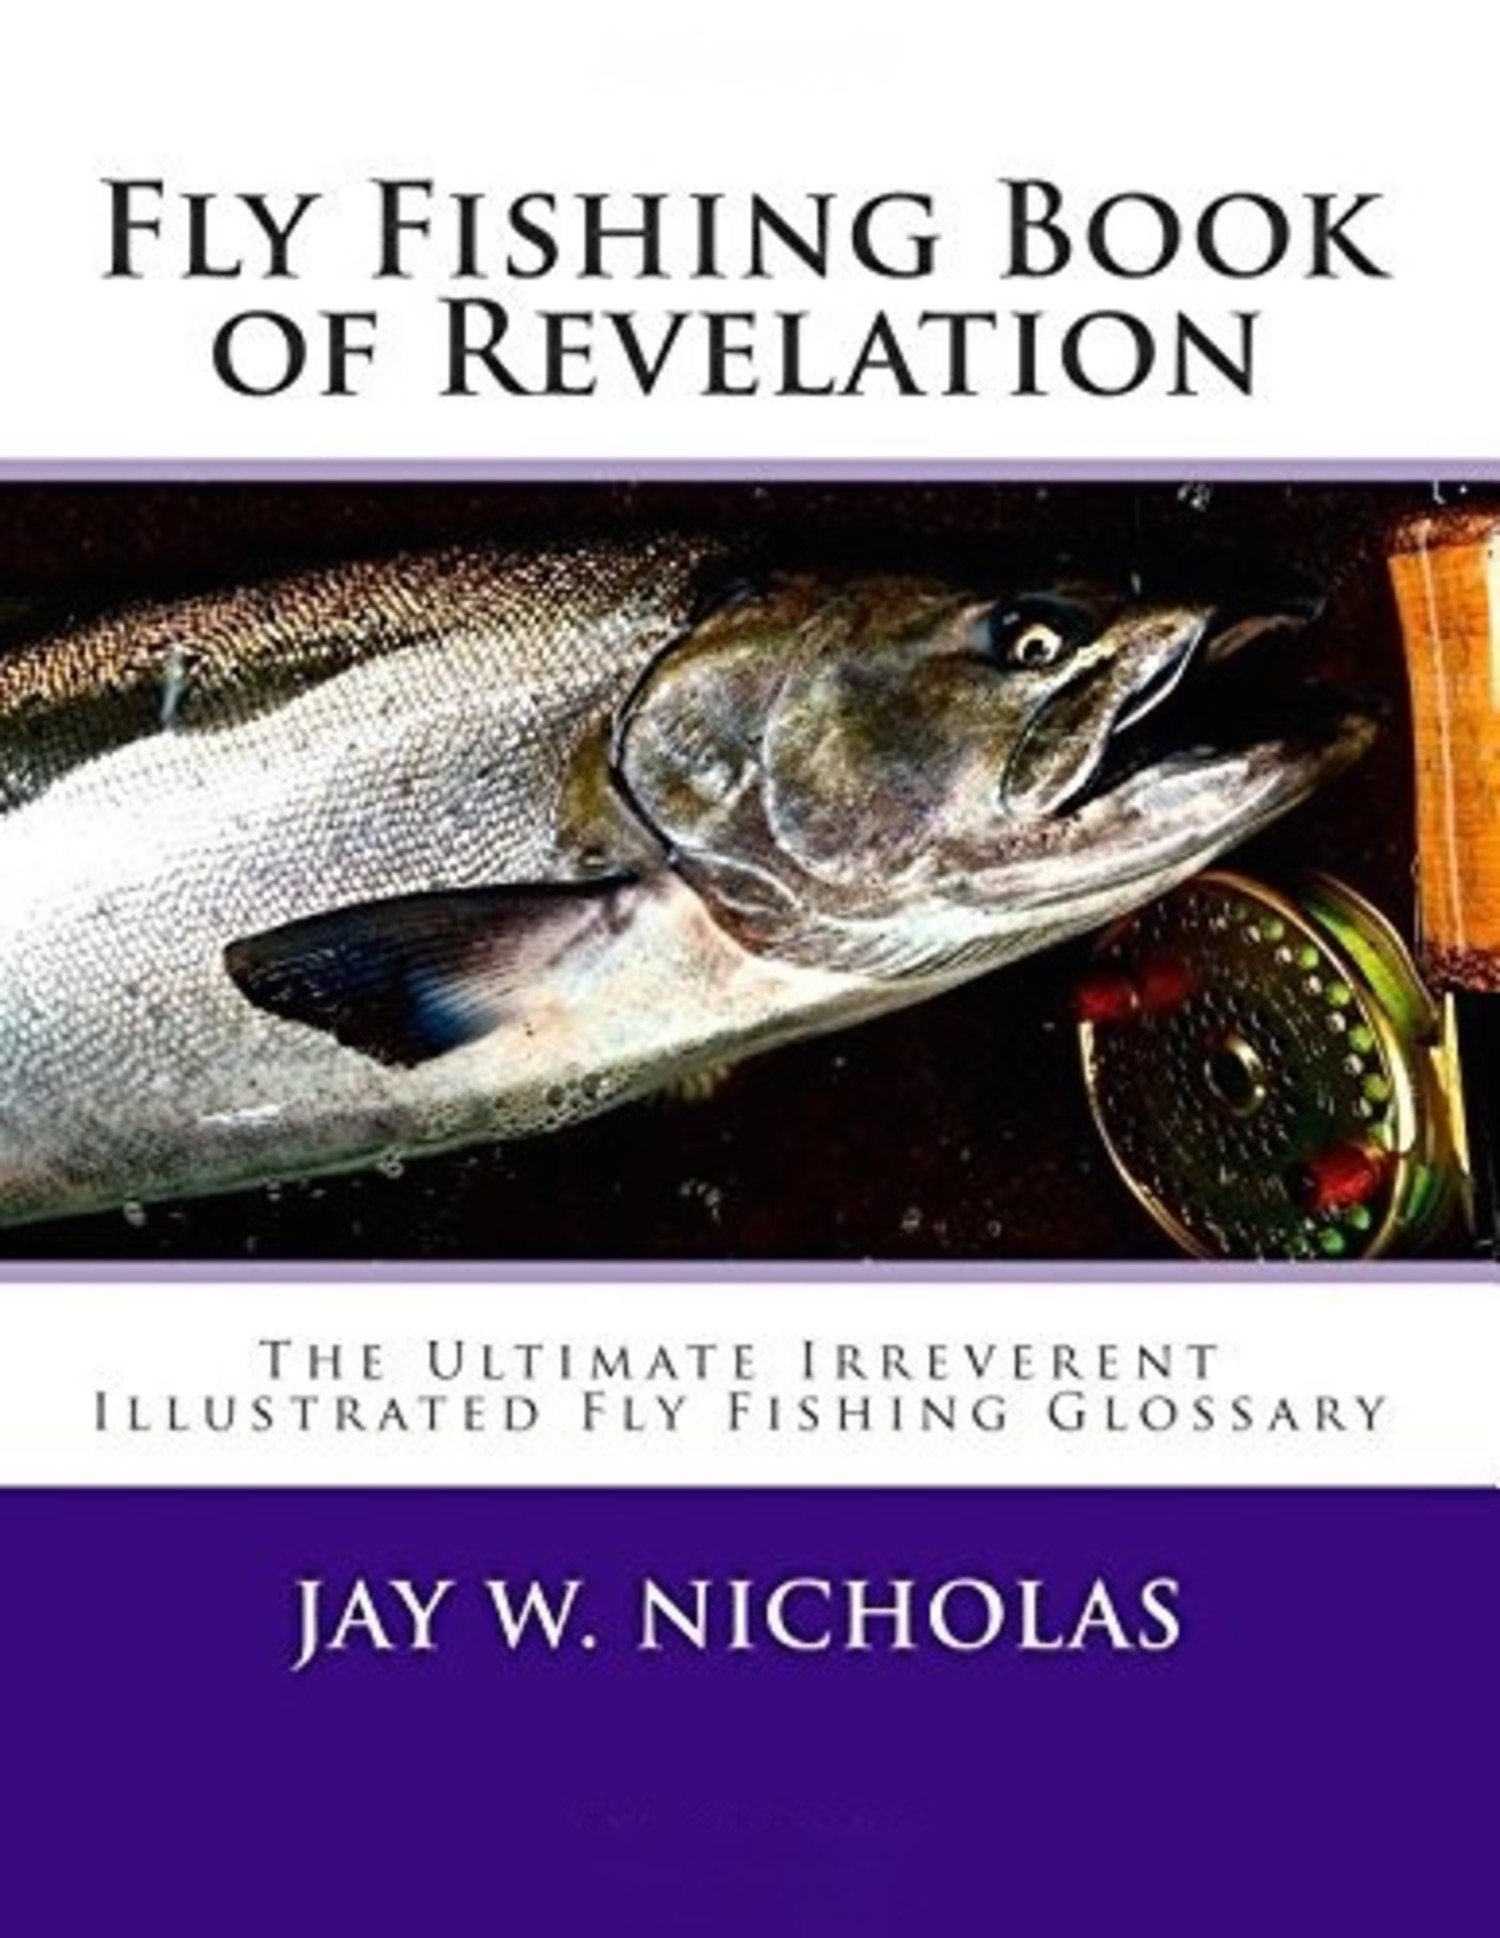 Jay Nicholas Fly Fishing Book of Revelation, By Jay Nicholas